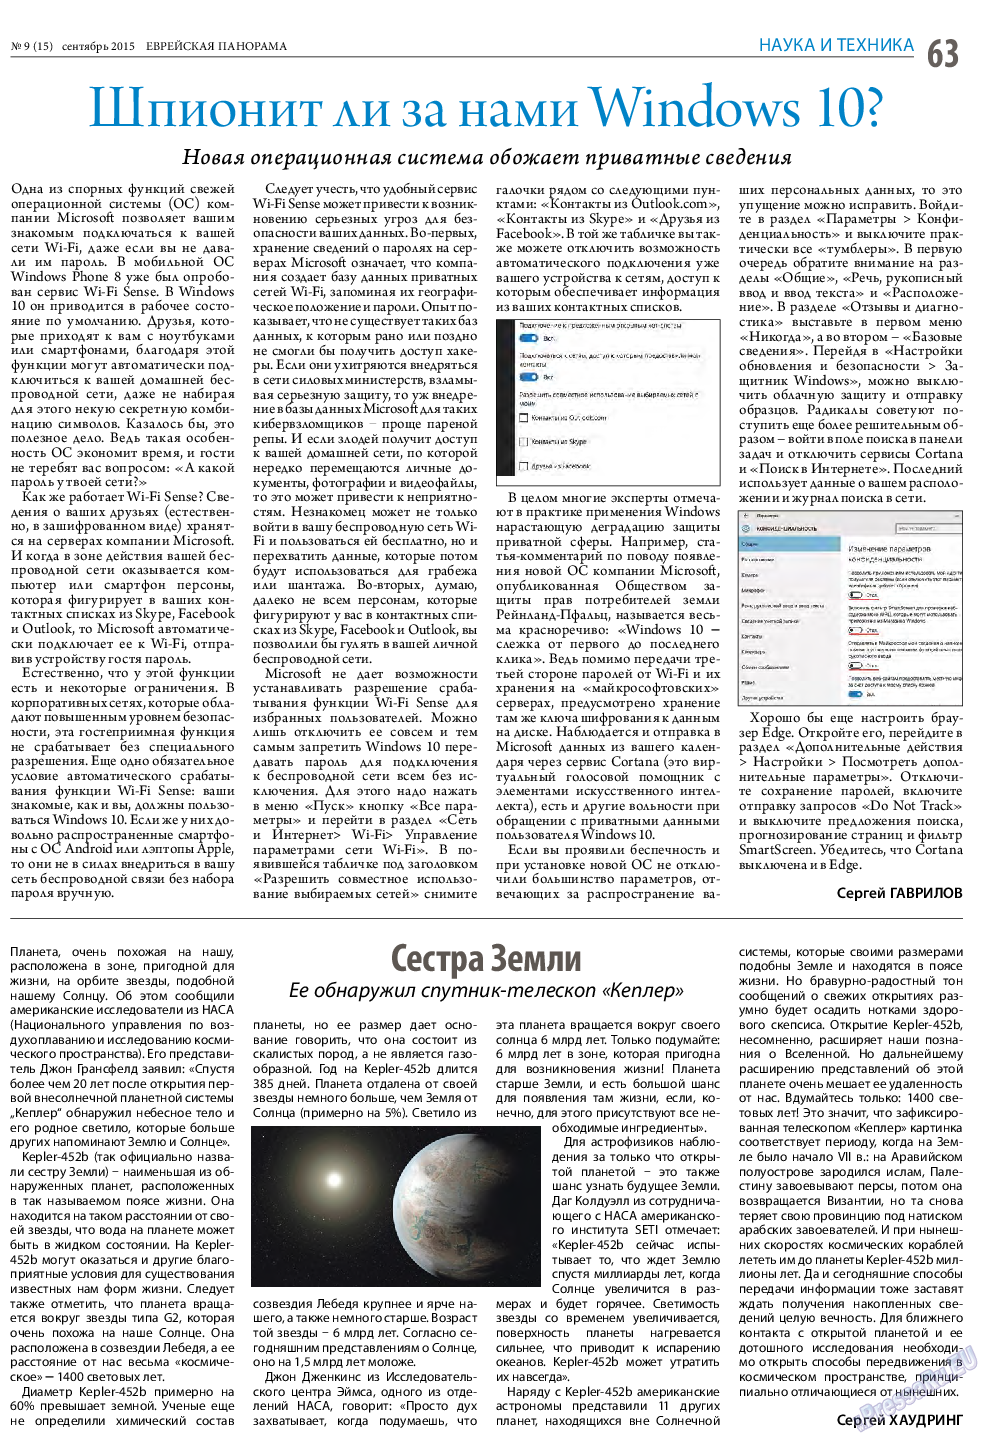 Еврейская панорама, газета. 2015 №9 стр.63